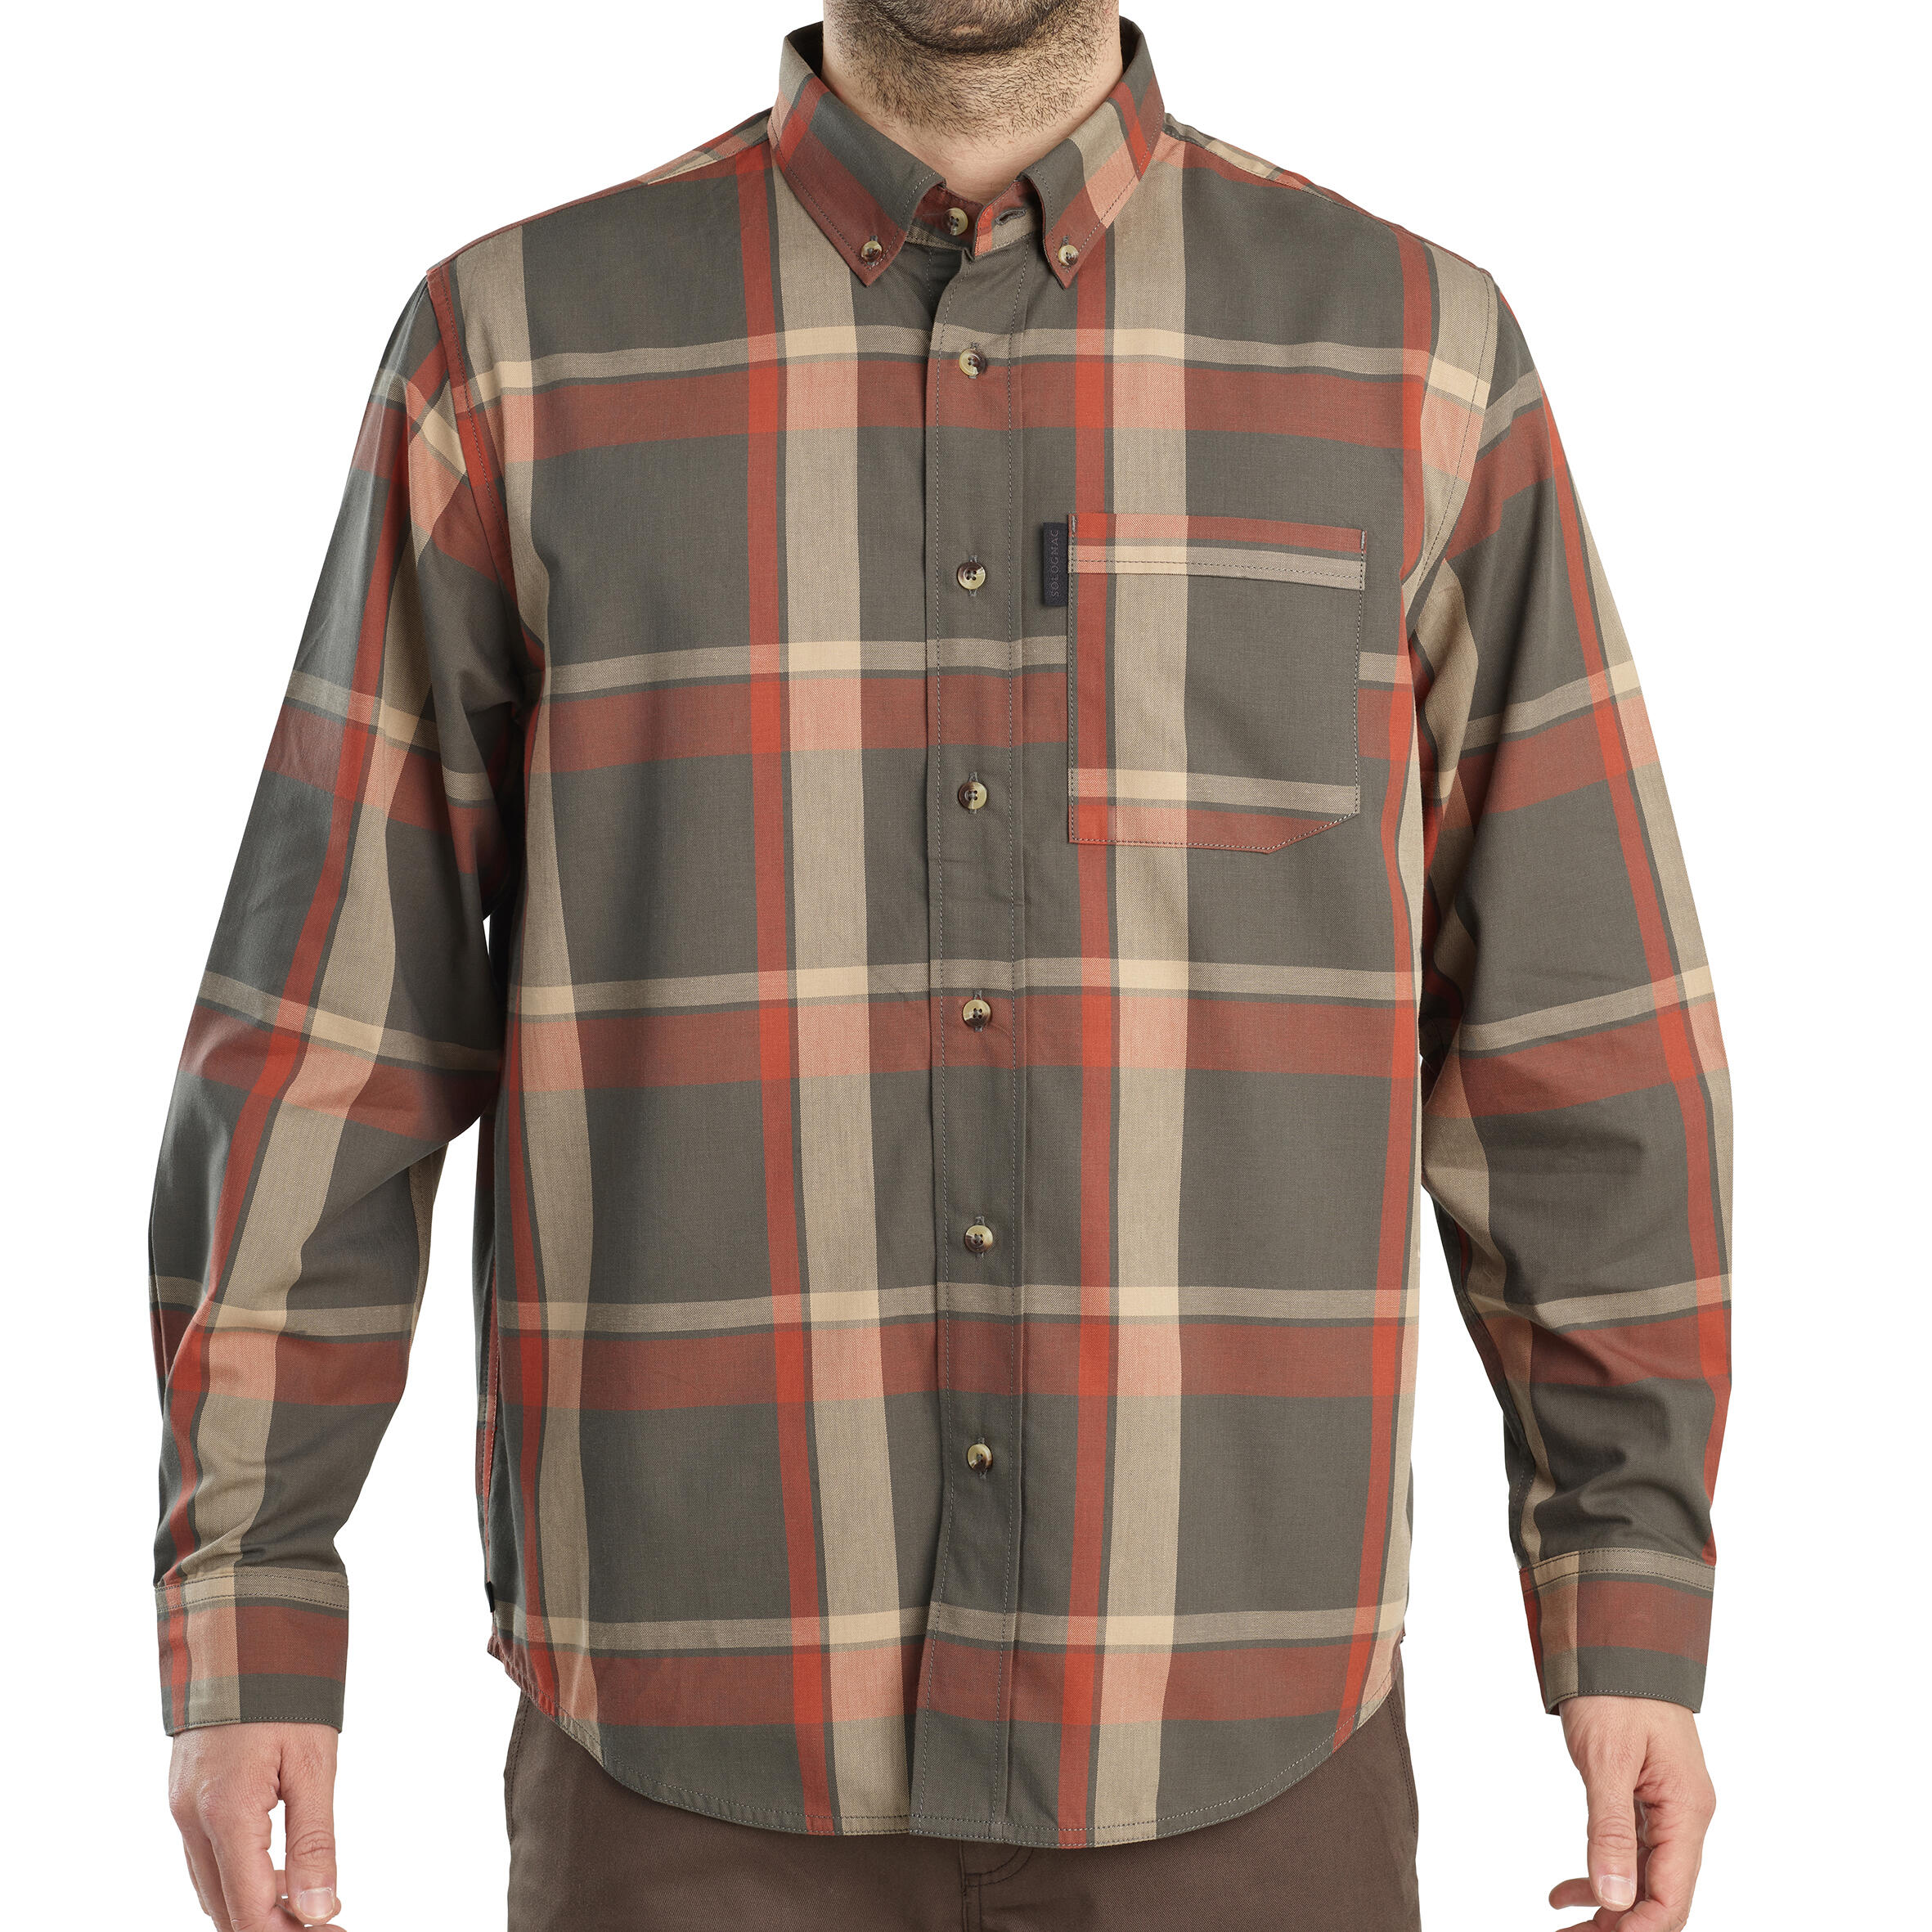 Long sleeve hunting shirt SG100 LTD - Green and Red 2/8